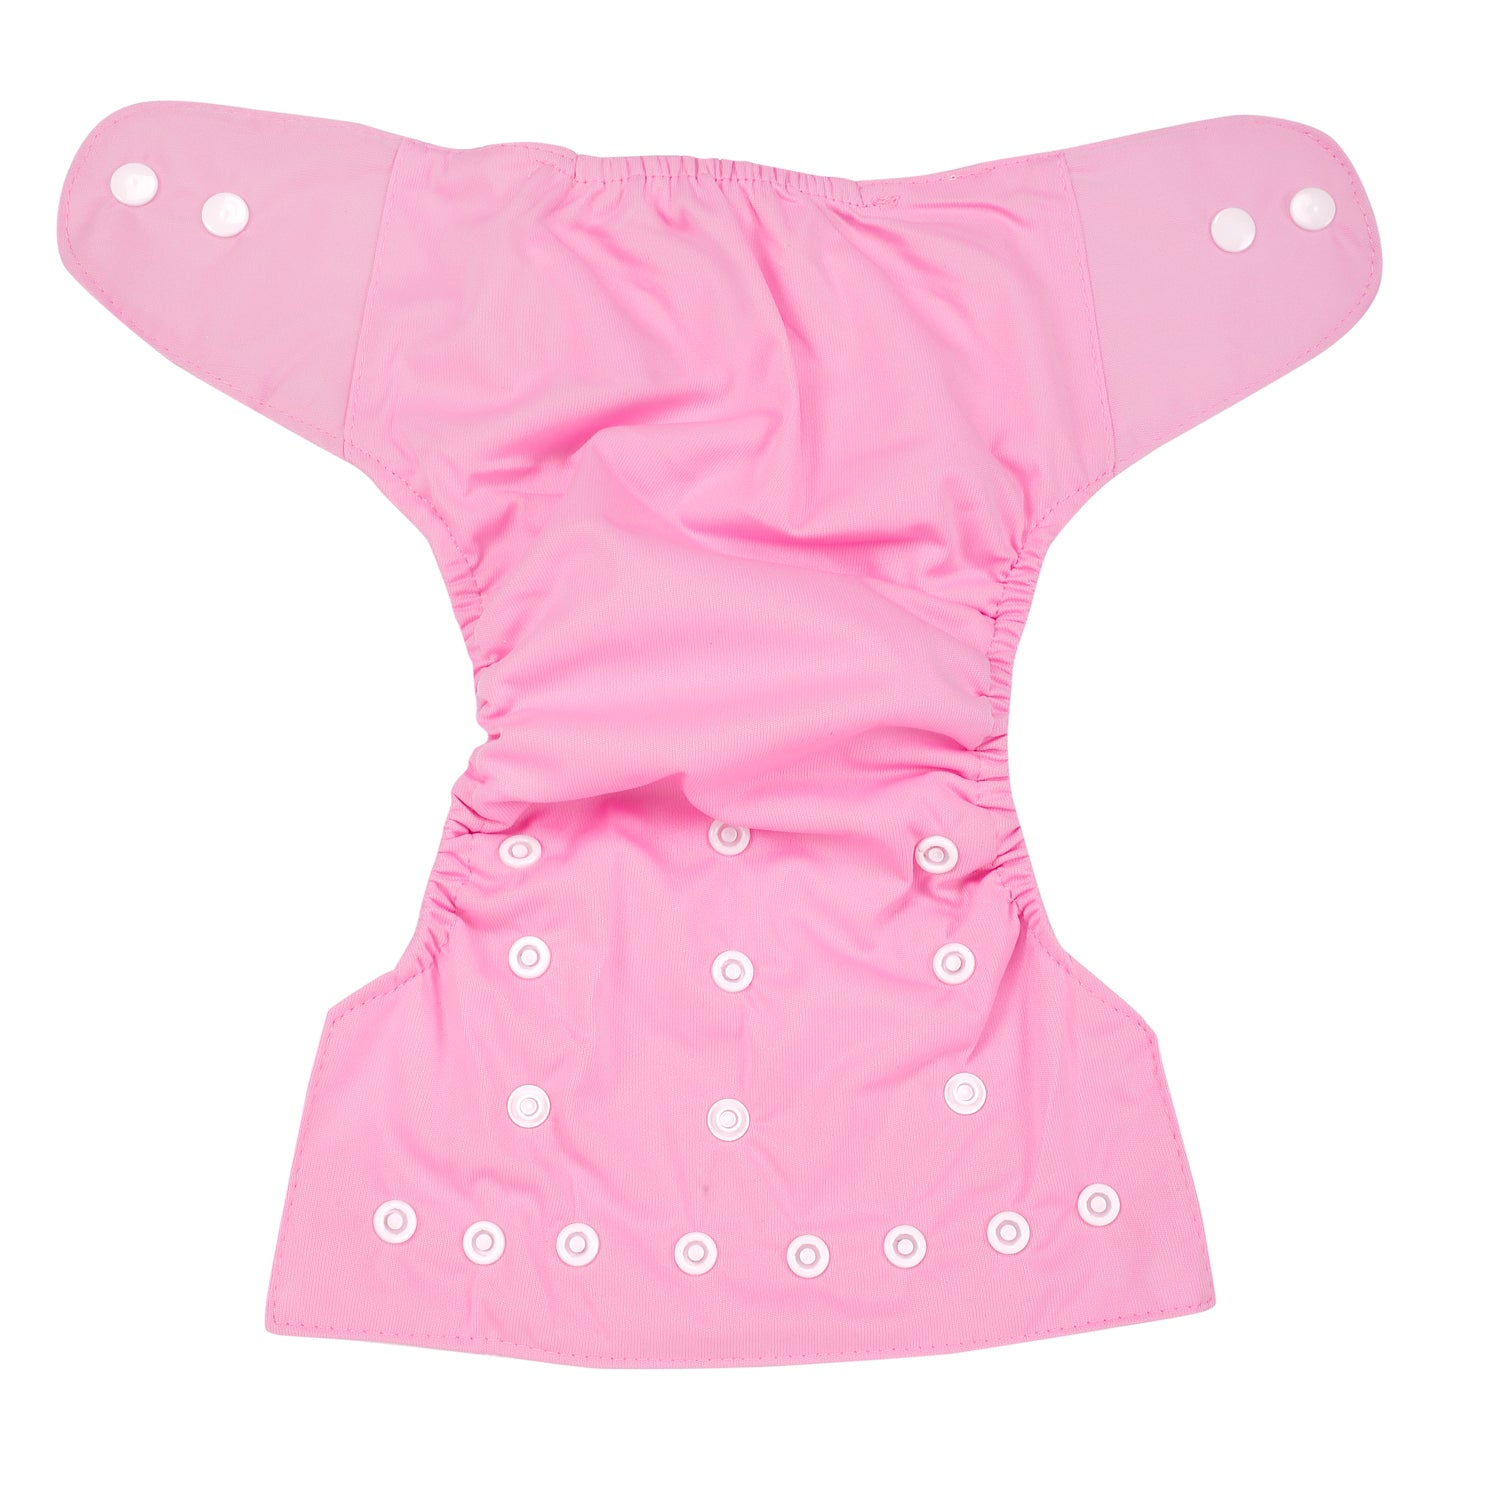 Plain Pink Reusable Diaper - Baby Moo